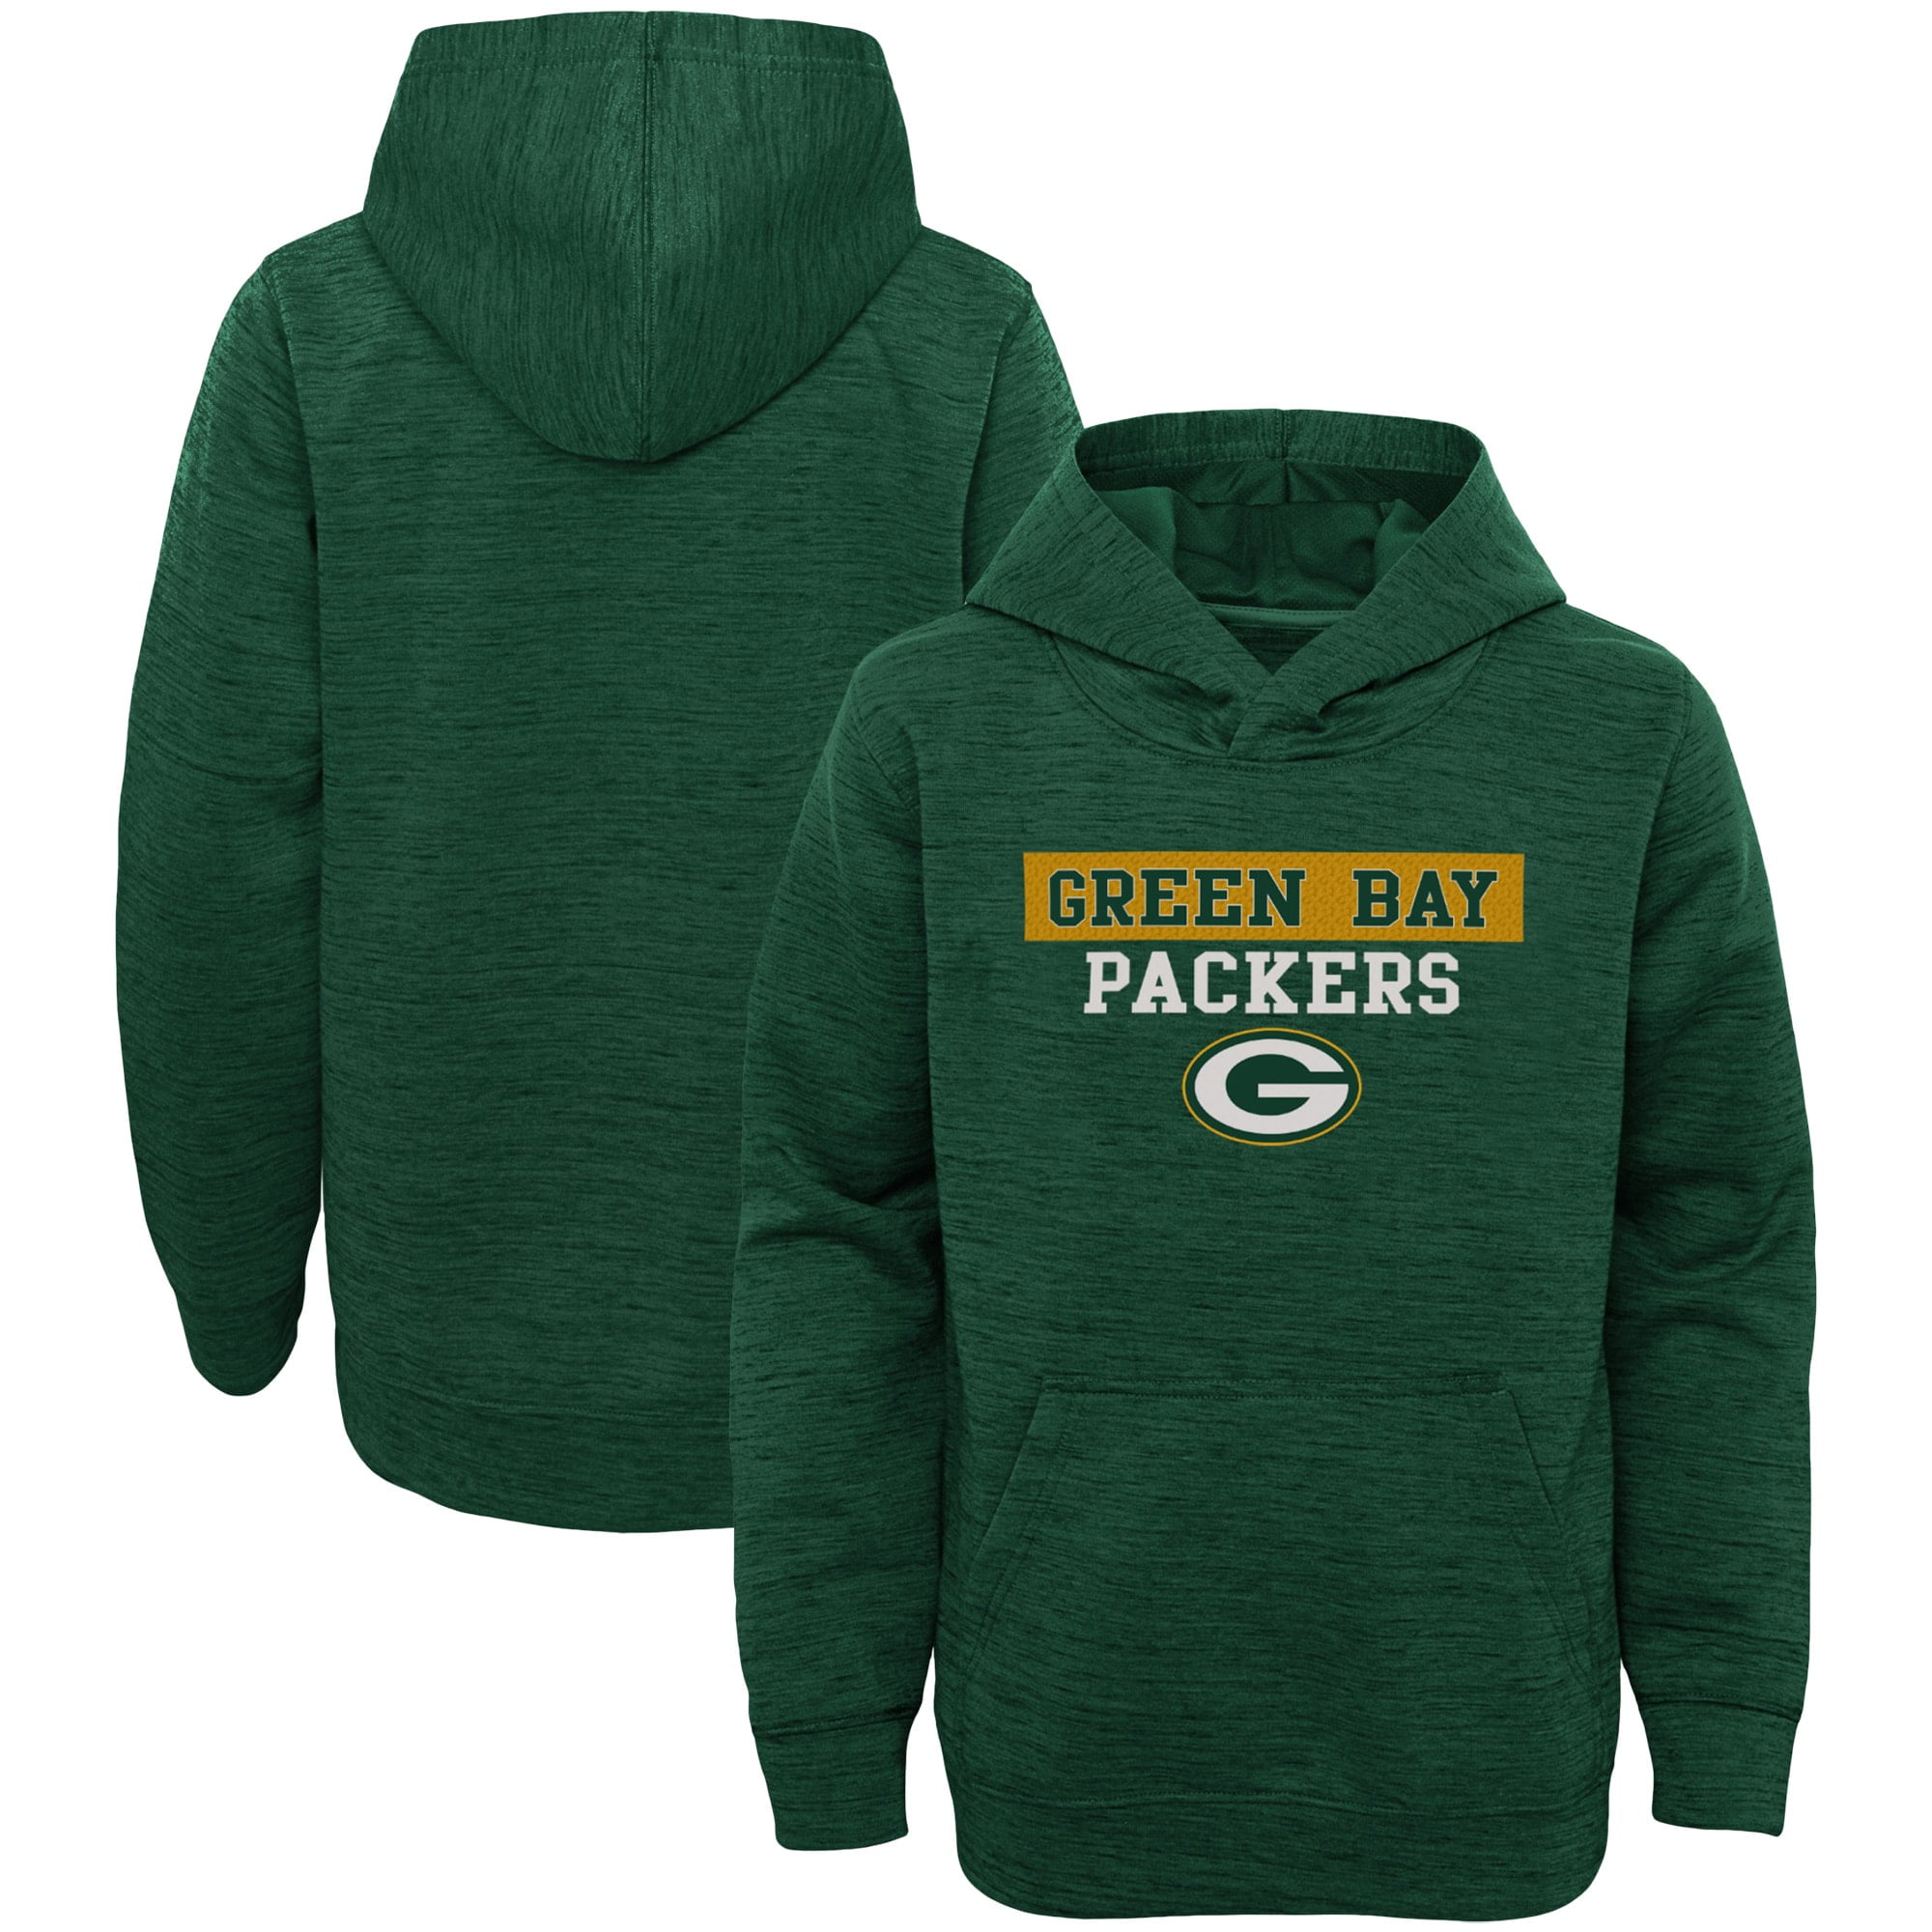 Green Bay Packers Sweatshirts - Walmart.com